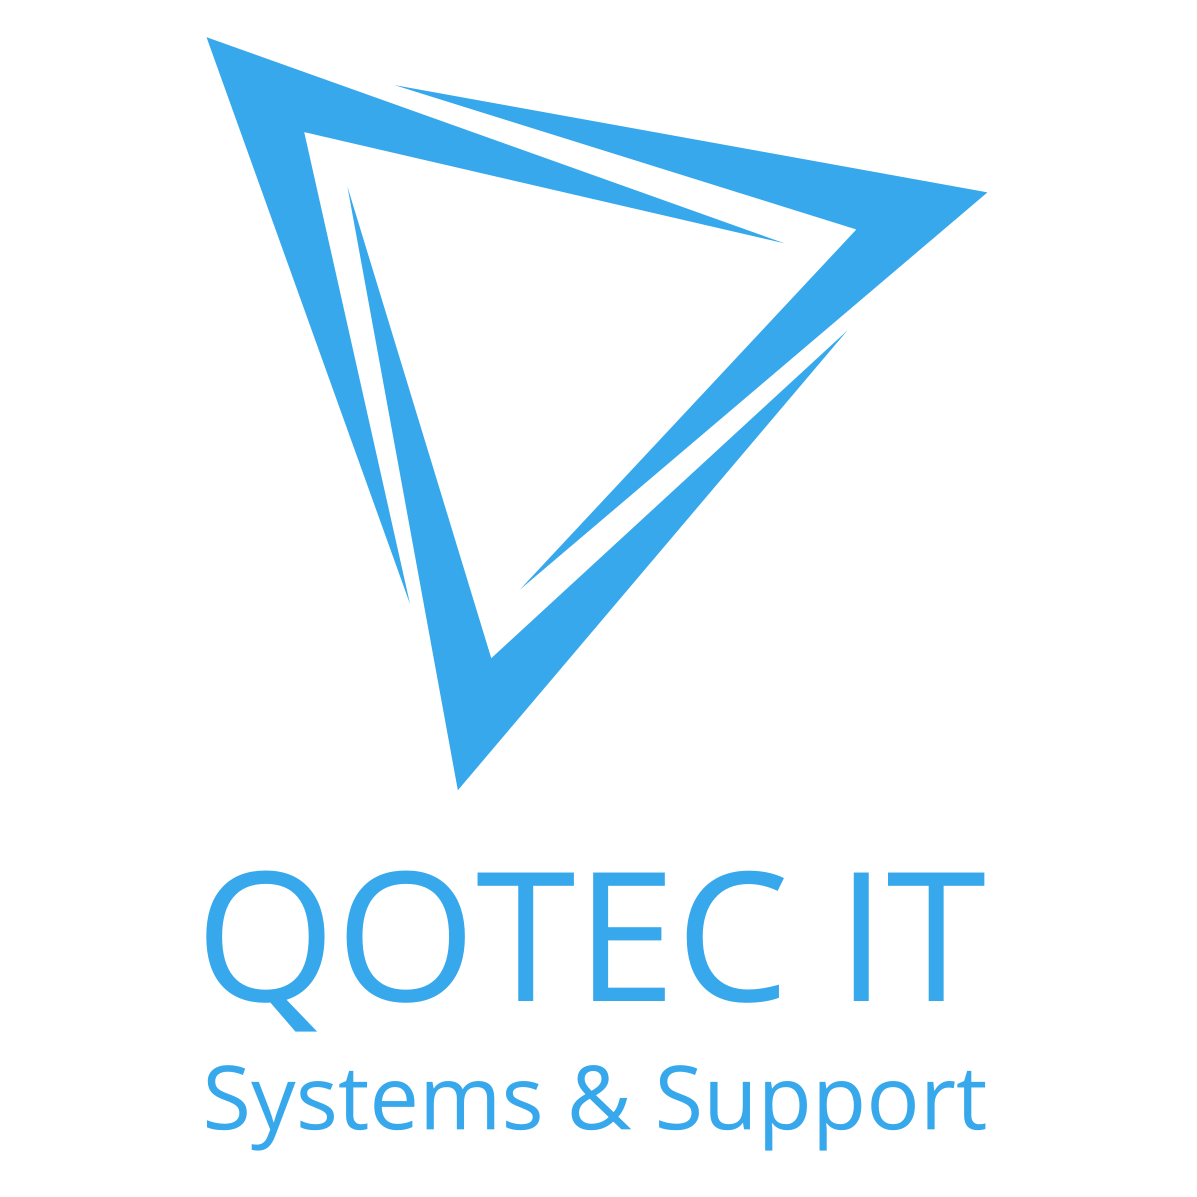 Logo von QOTEC - König & Hauswirth OG